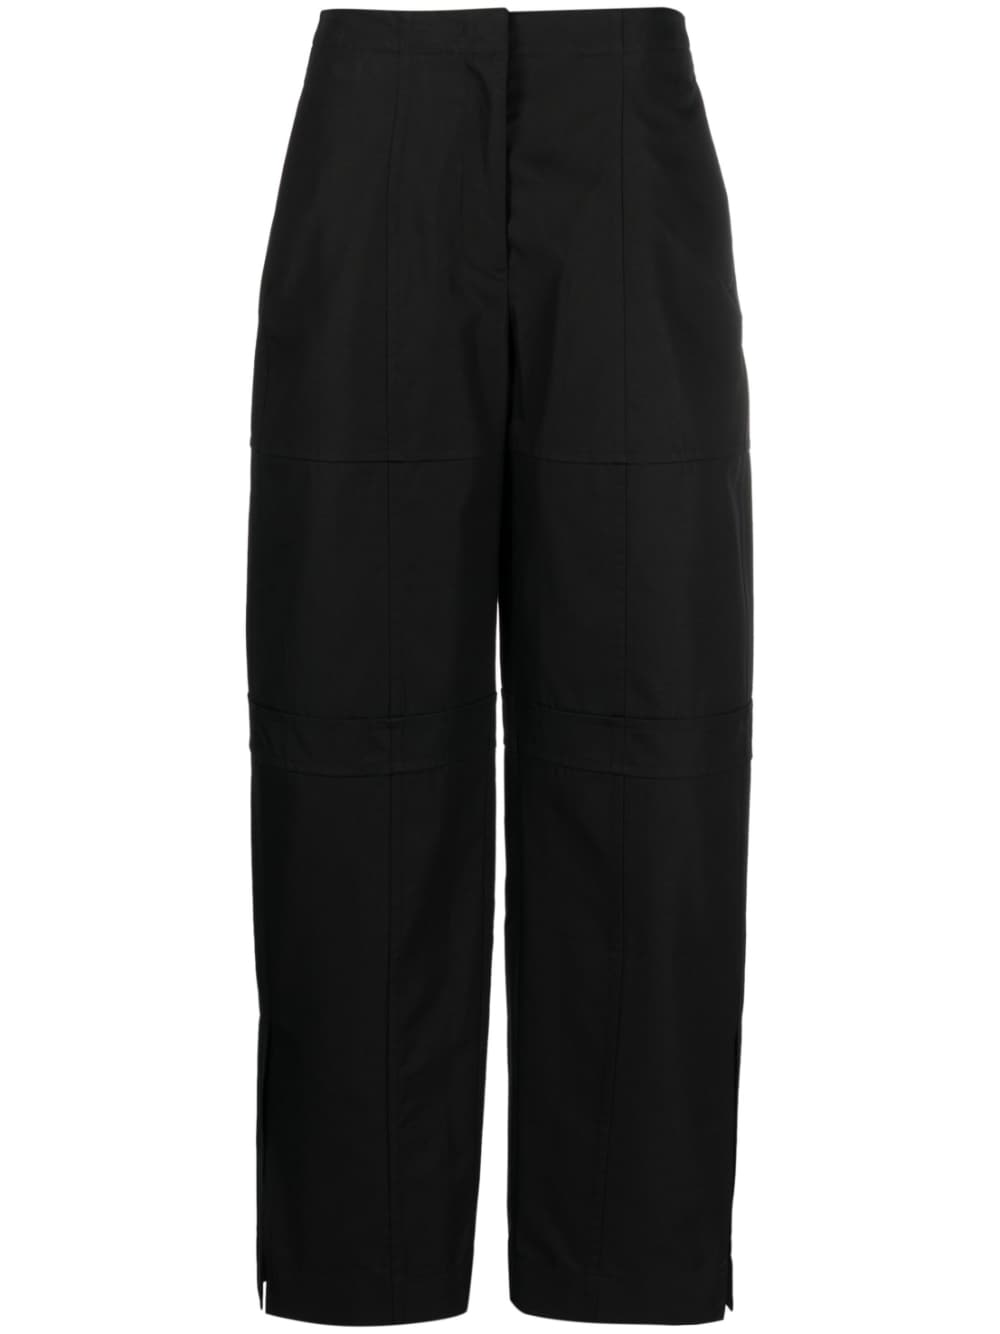 JIL SANDER Black Cargo Pants for Women - SS23 Collection